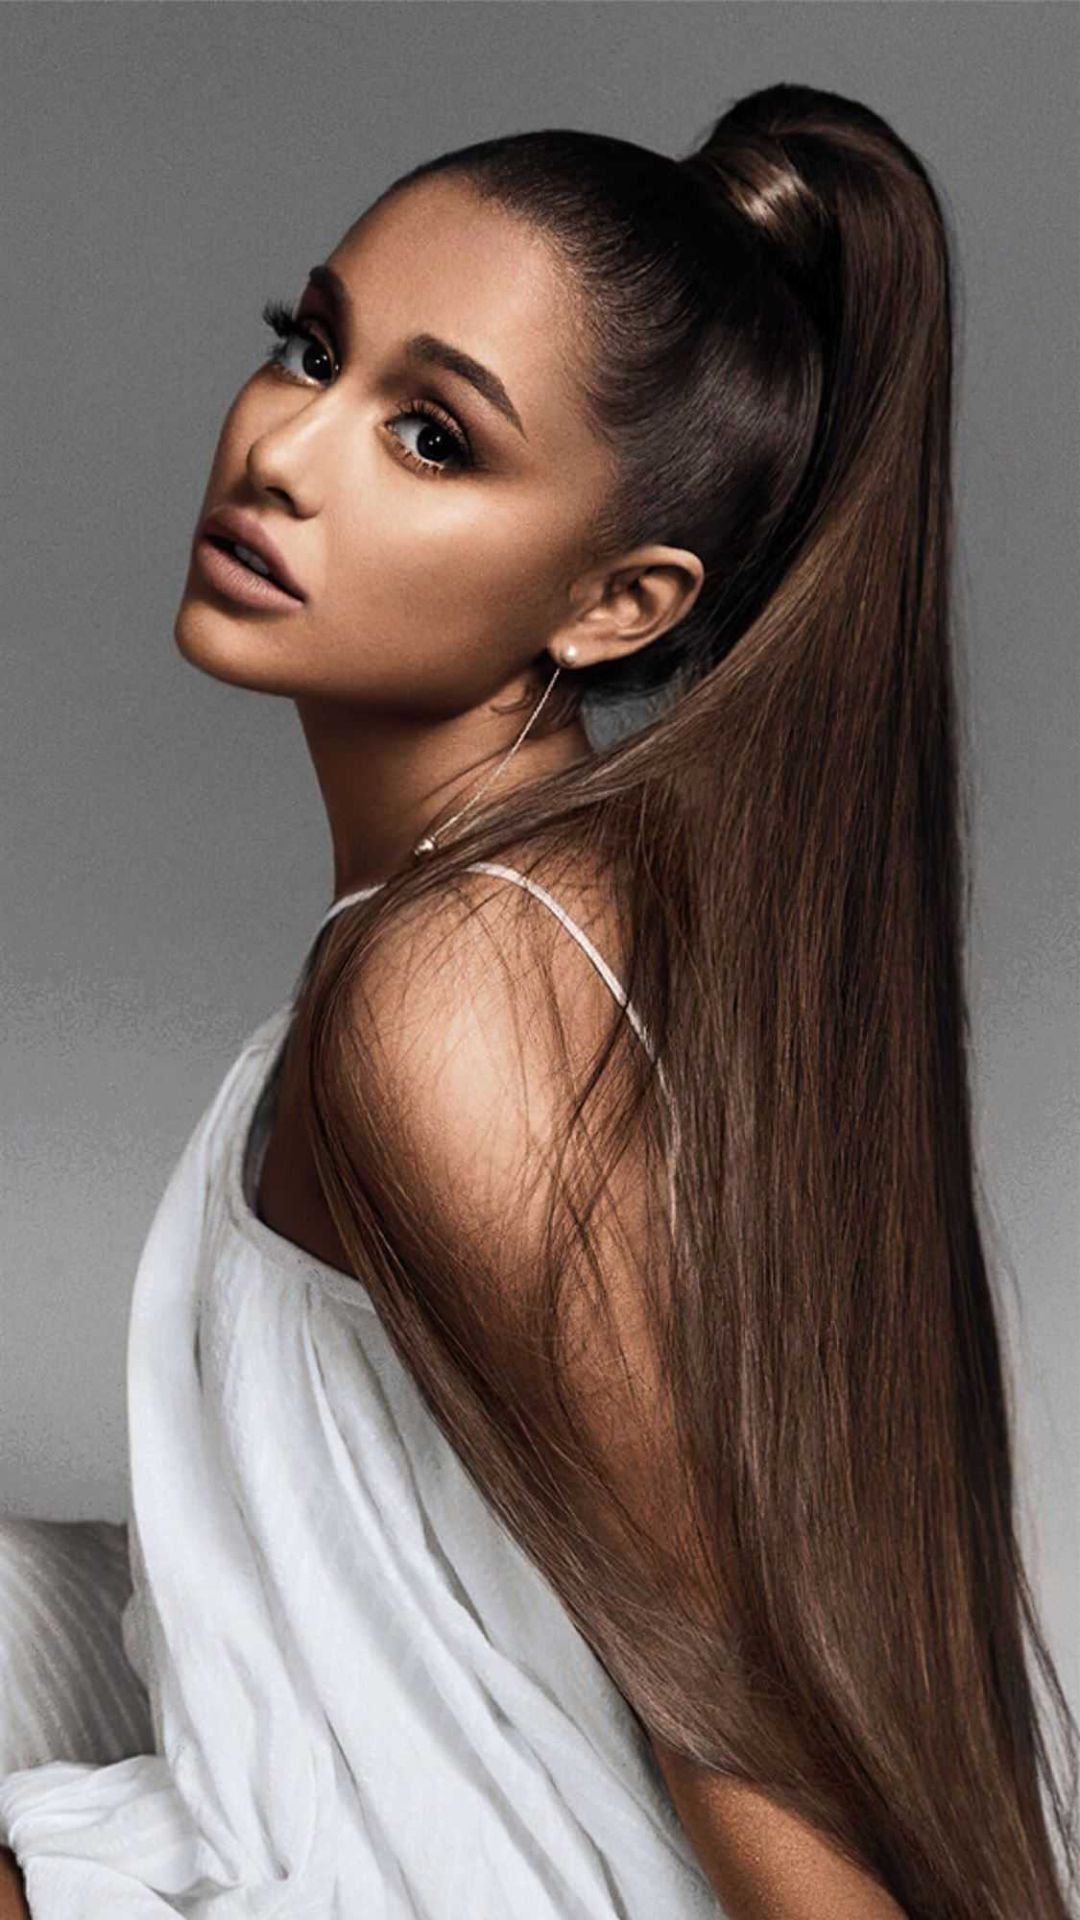 Cute Ariana Grande Android Wallpaper